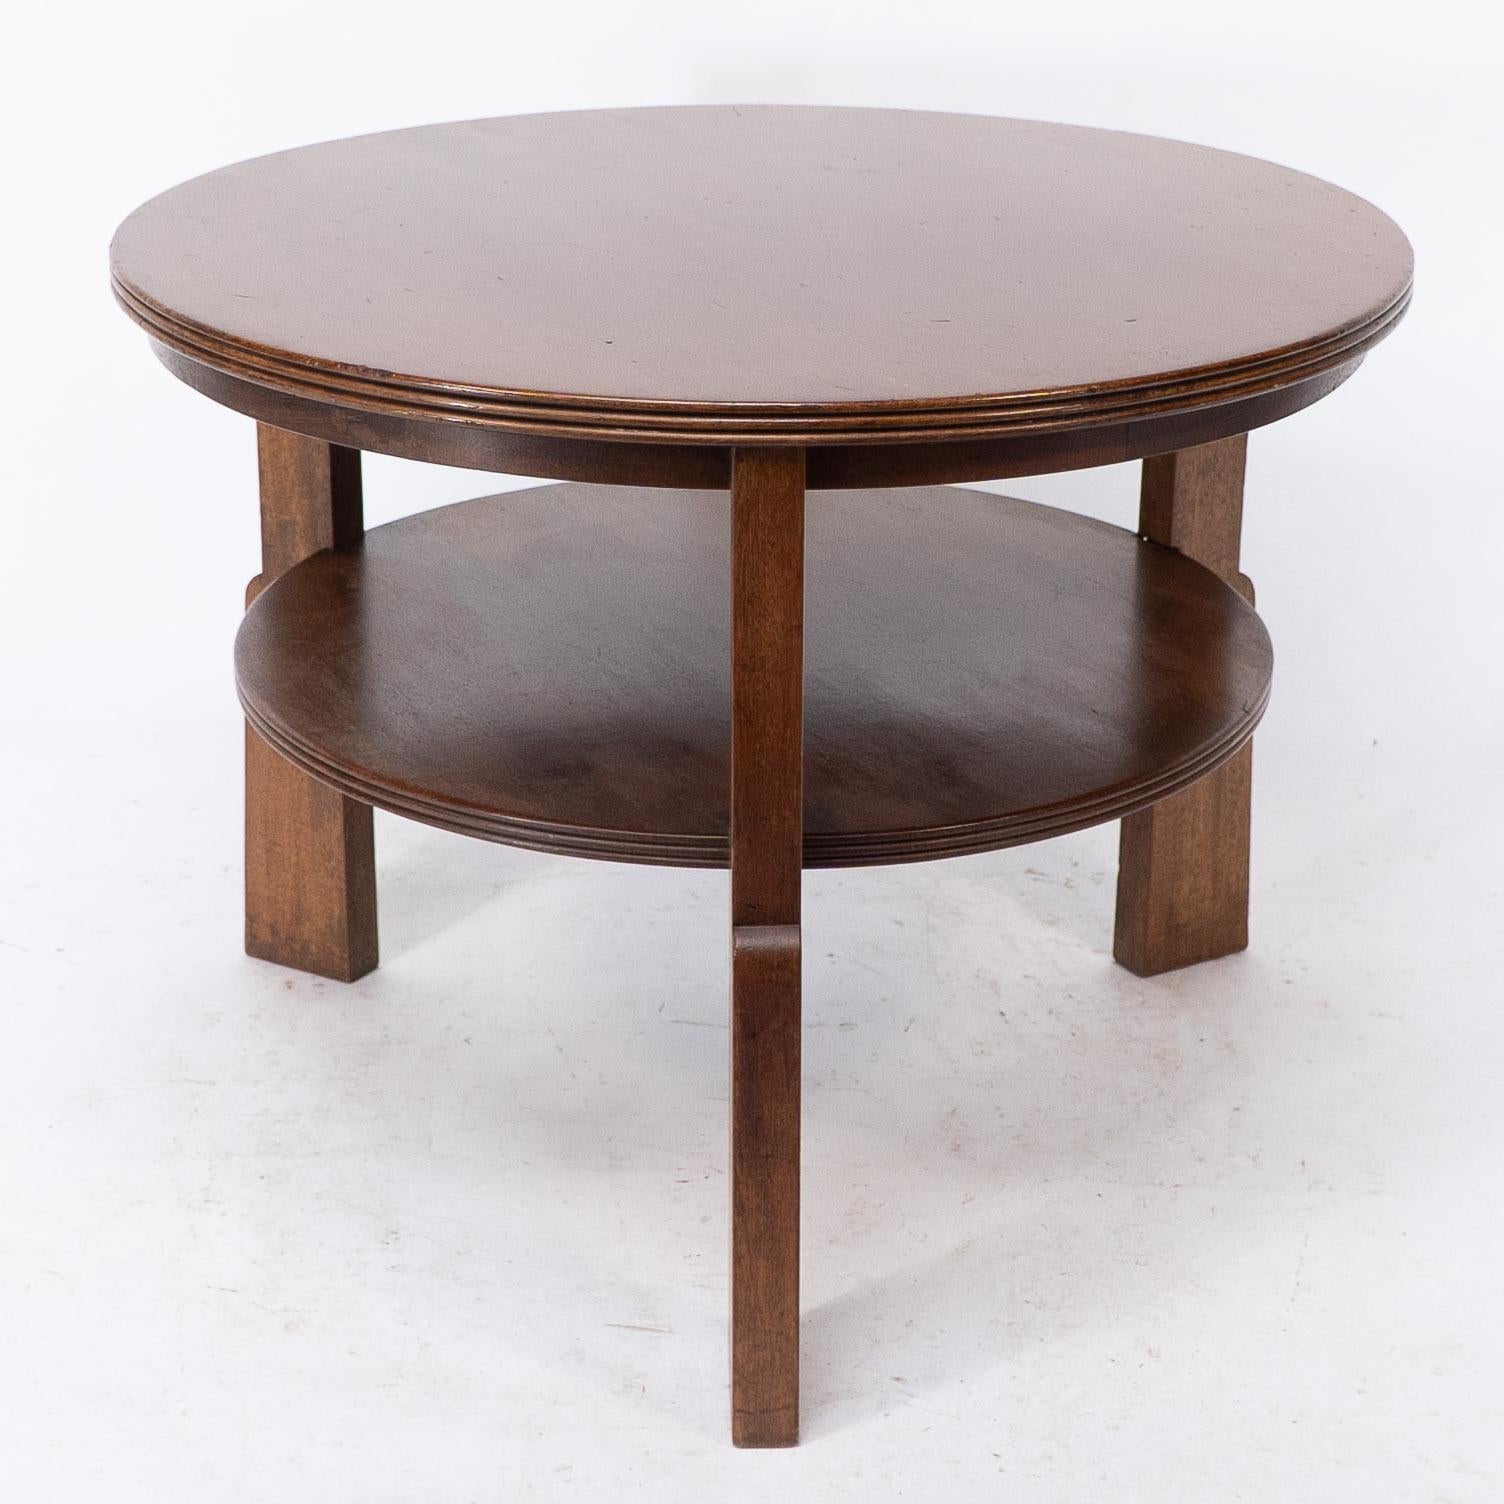 Gordon Russell, a Gunstock figured walnut circular coffee table with under tier, on three gunstock shaped legs.
Original Broadway label.